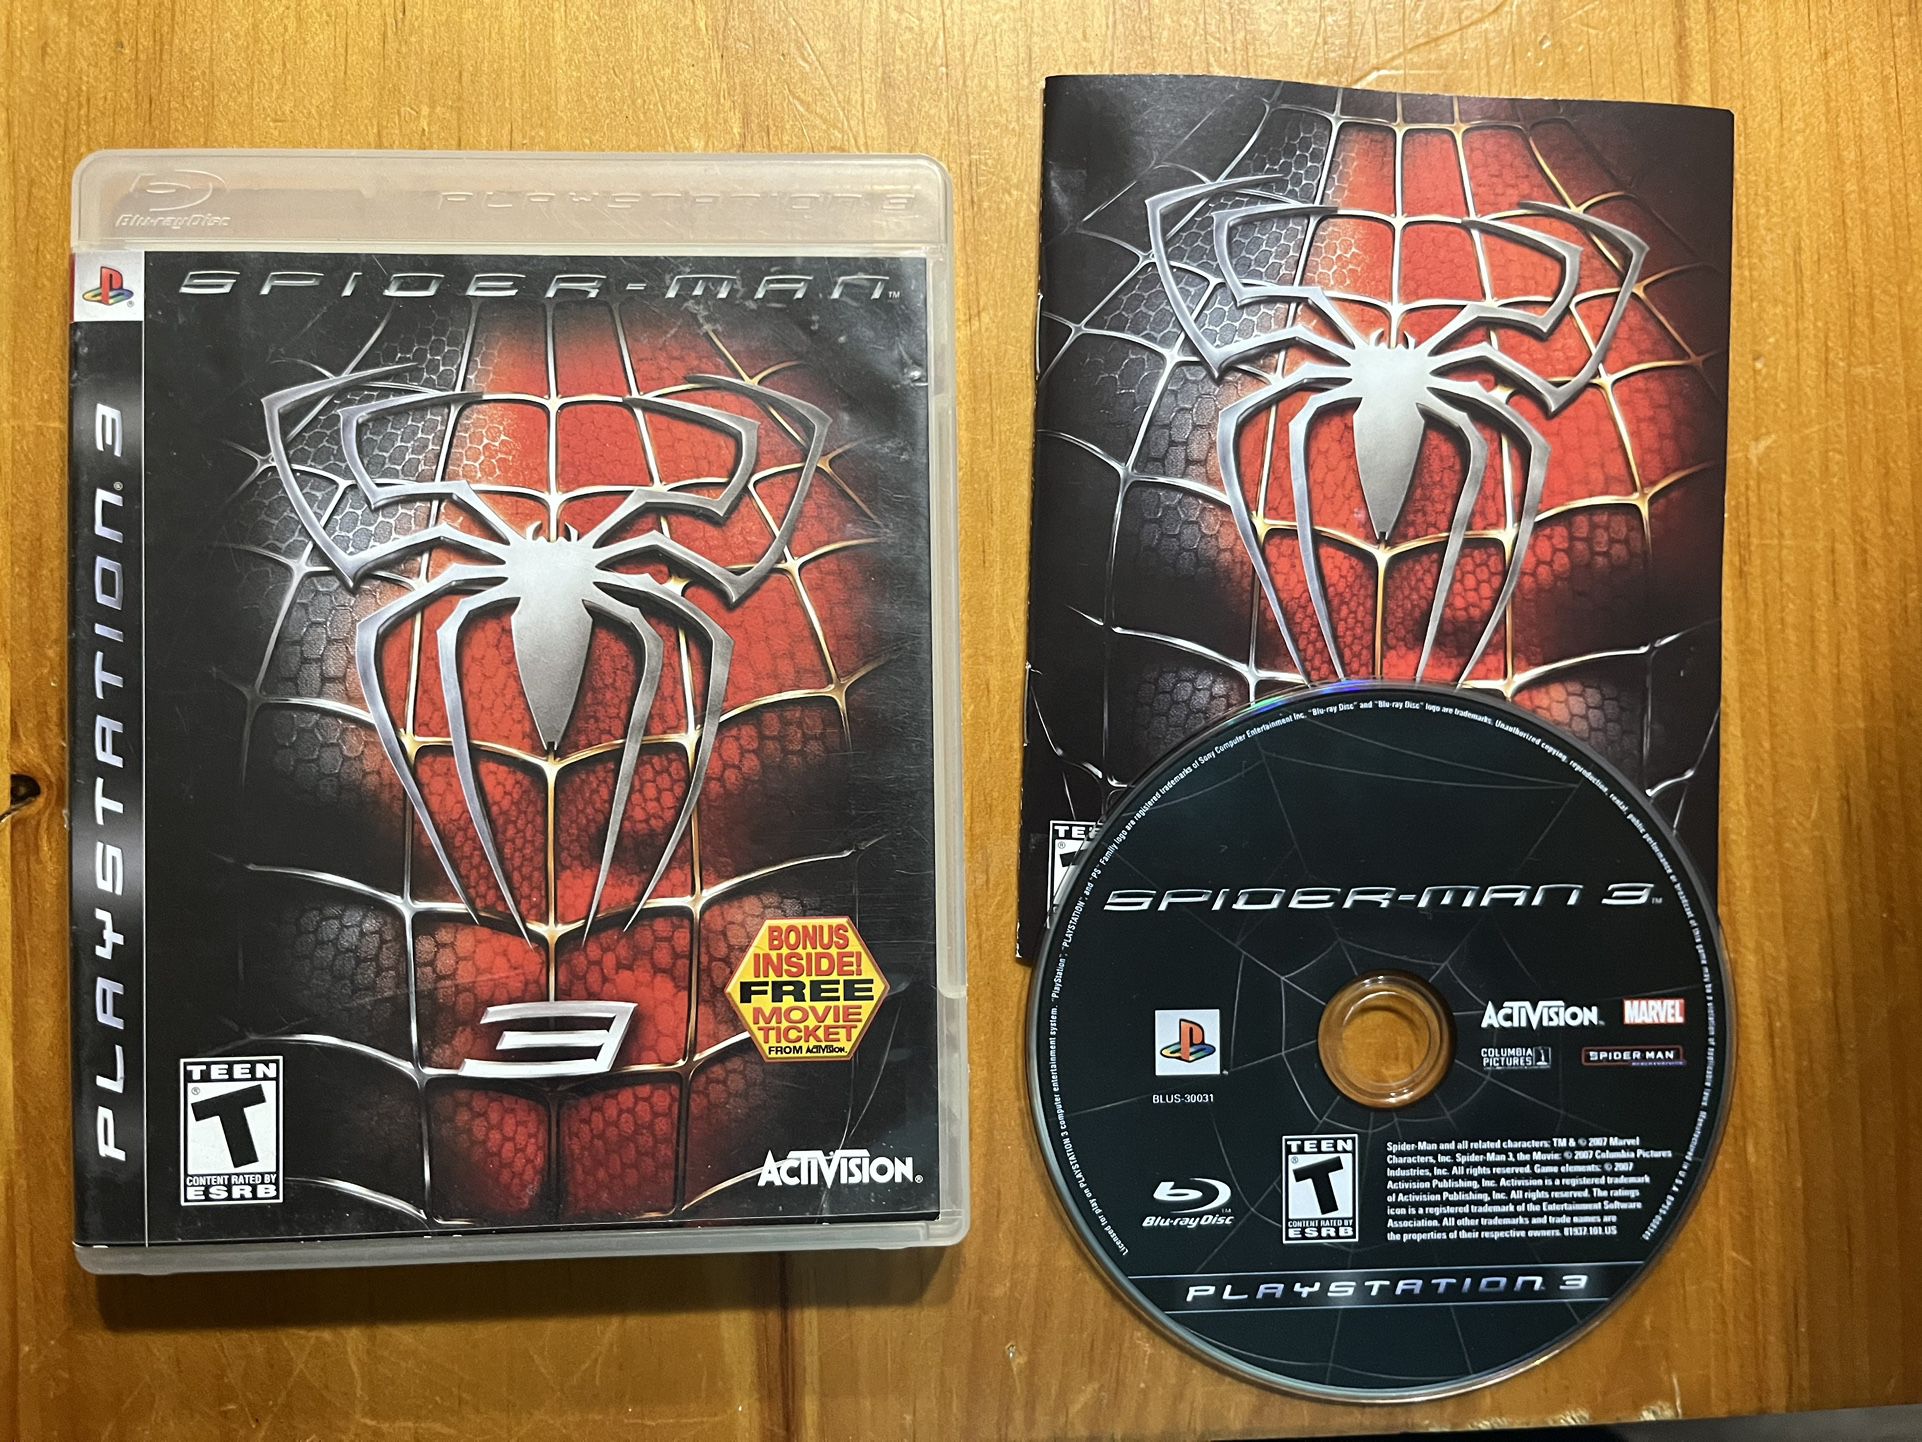 Spider-Man 3 For PlayStation 3 w/Movie Ticket